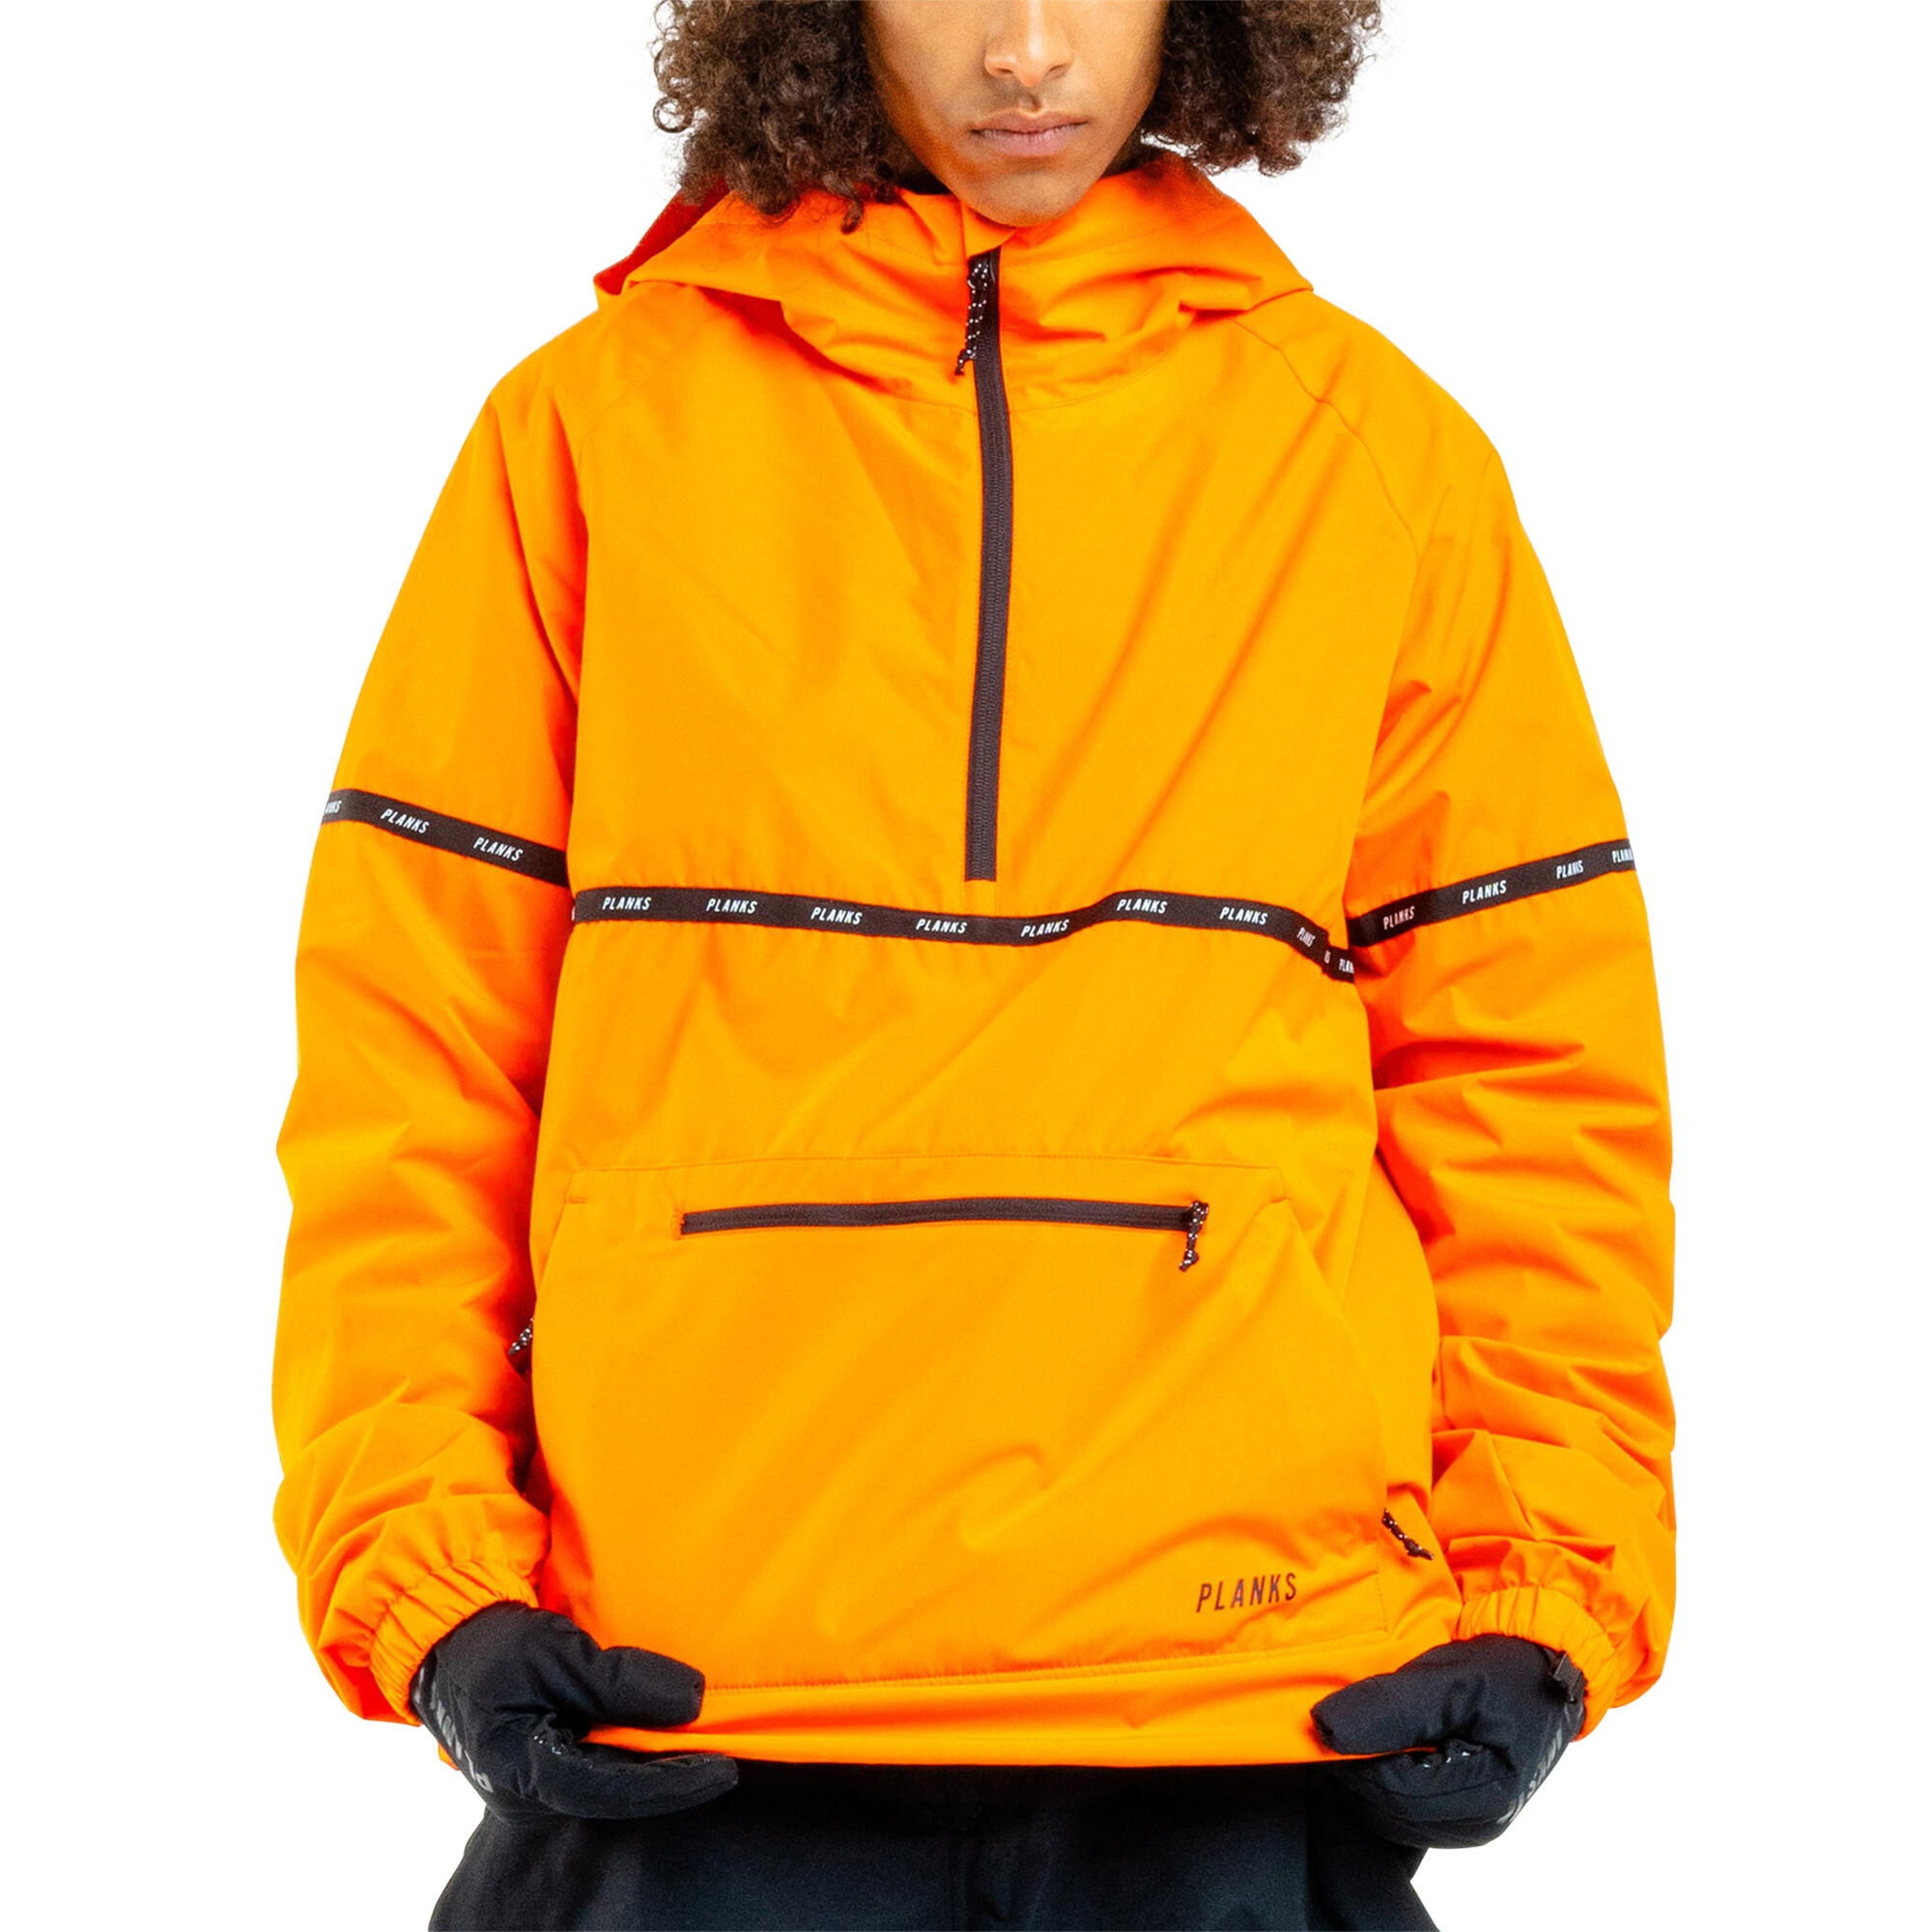 PLANKS Planks Unisex Gateway Smock Anorak Ski Jacket in Lifeboat Orange Waterproof Coat